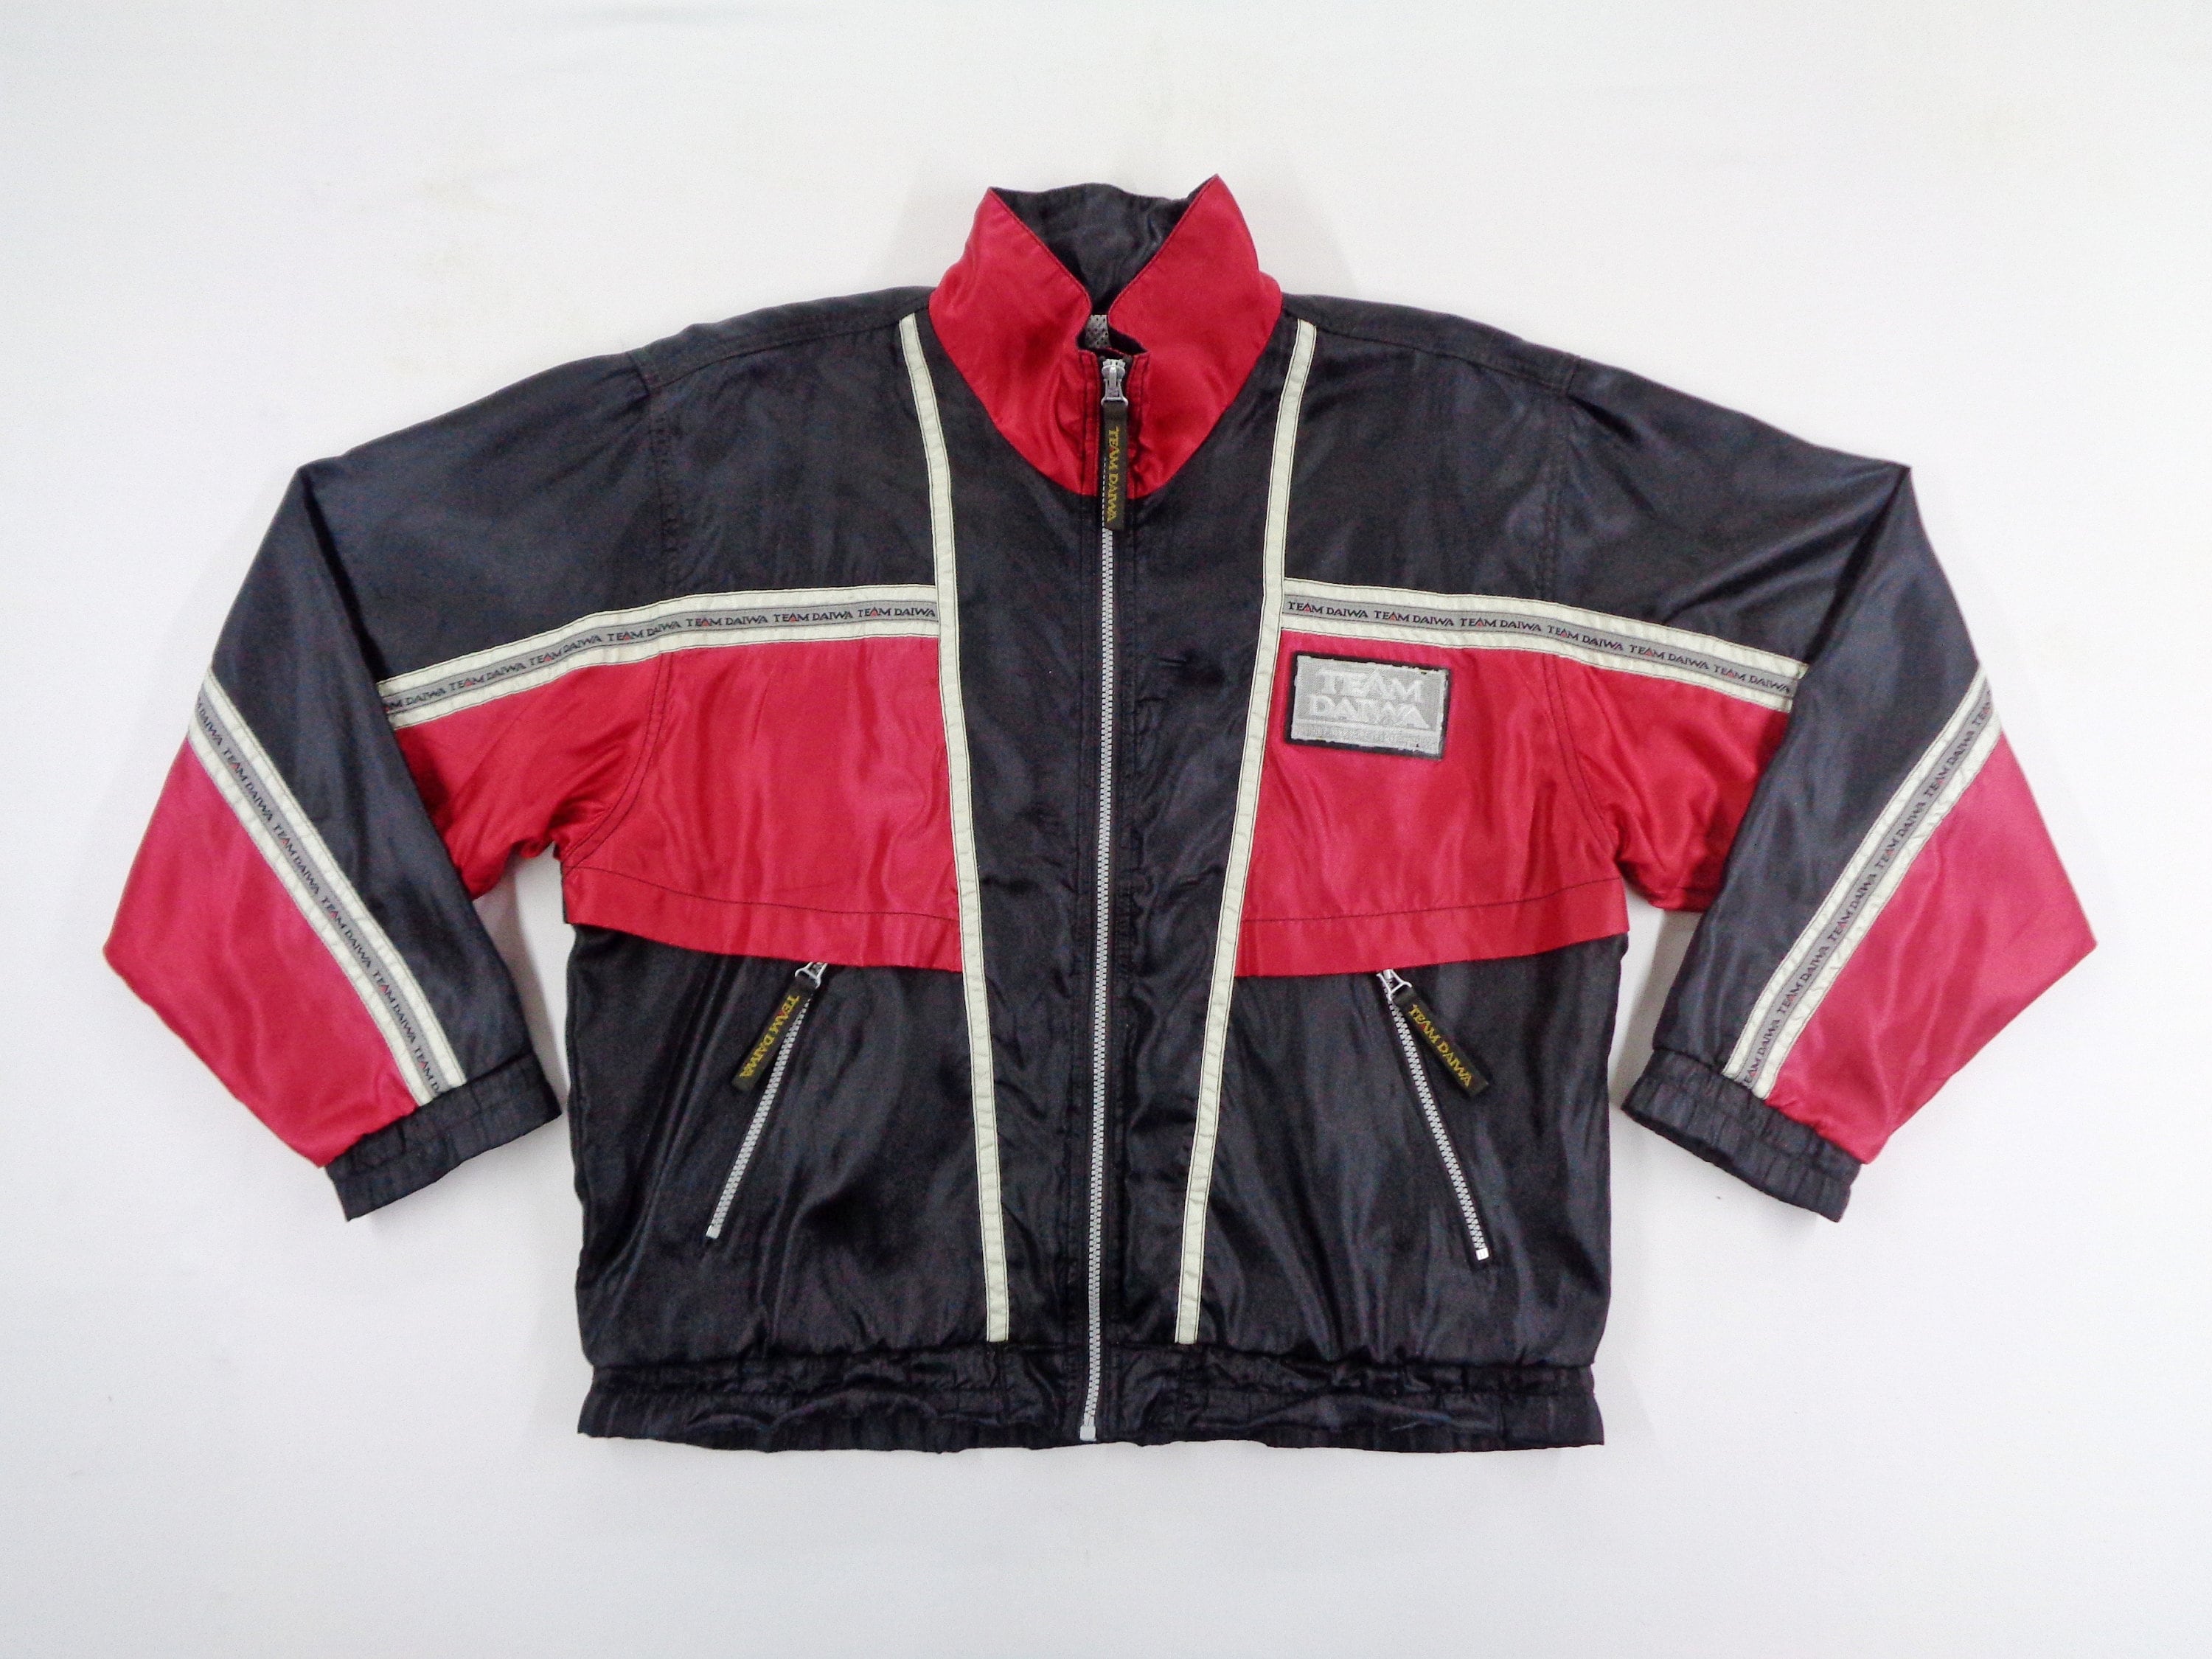 Vintage Daiwa Jacket 